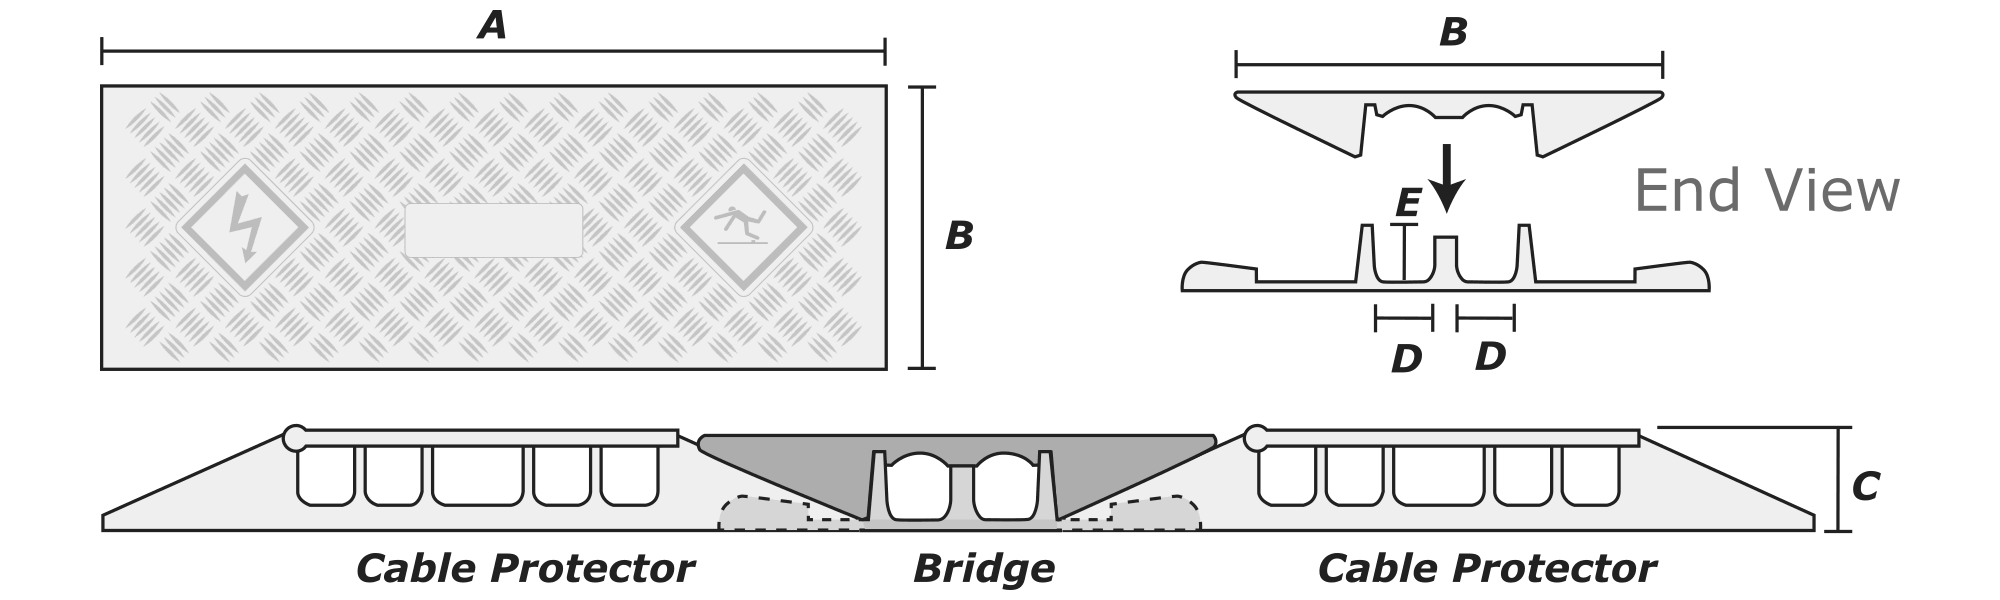 5 Channel General Purpose Linebacker® Cable Protector Bridge